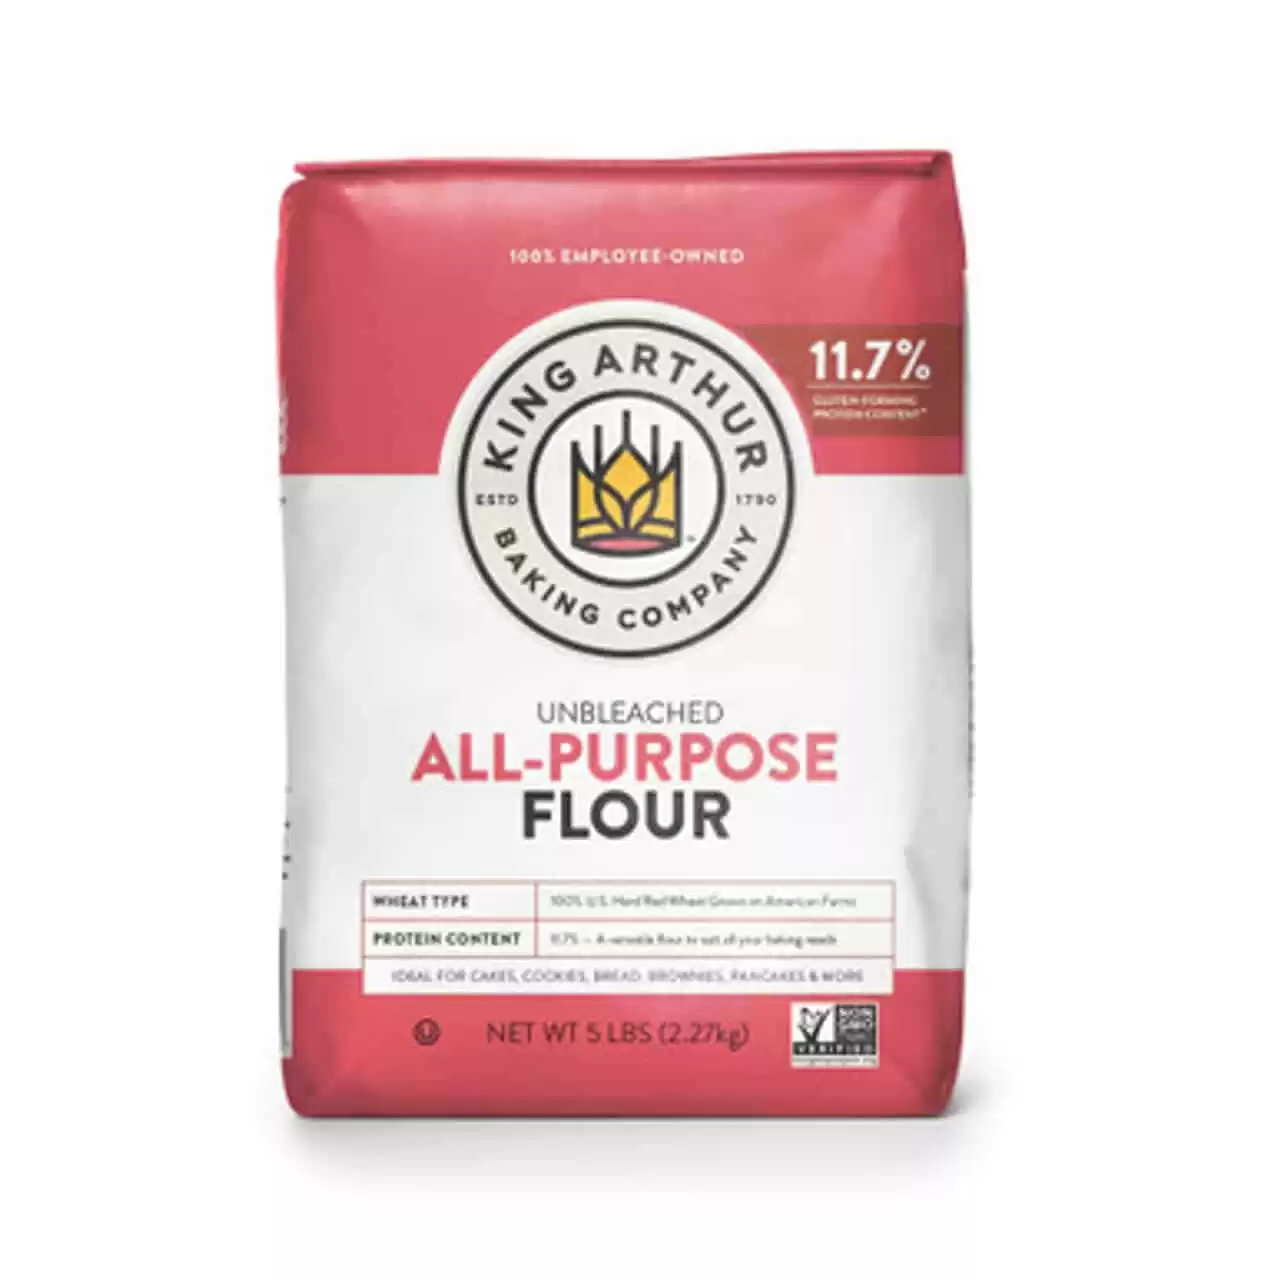 King Arthur All-Purpose Flour, 5 lbs